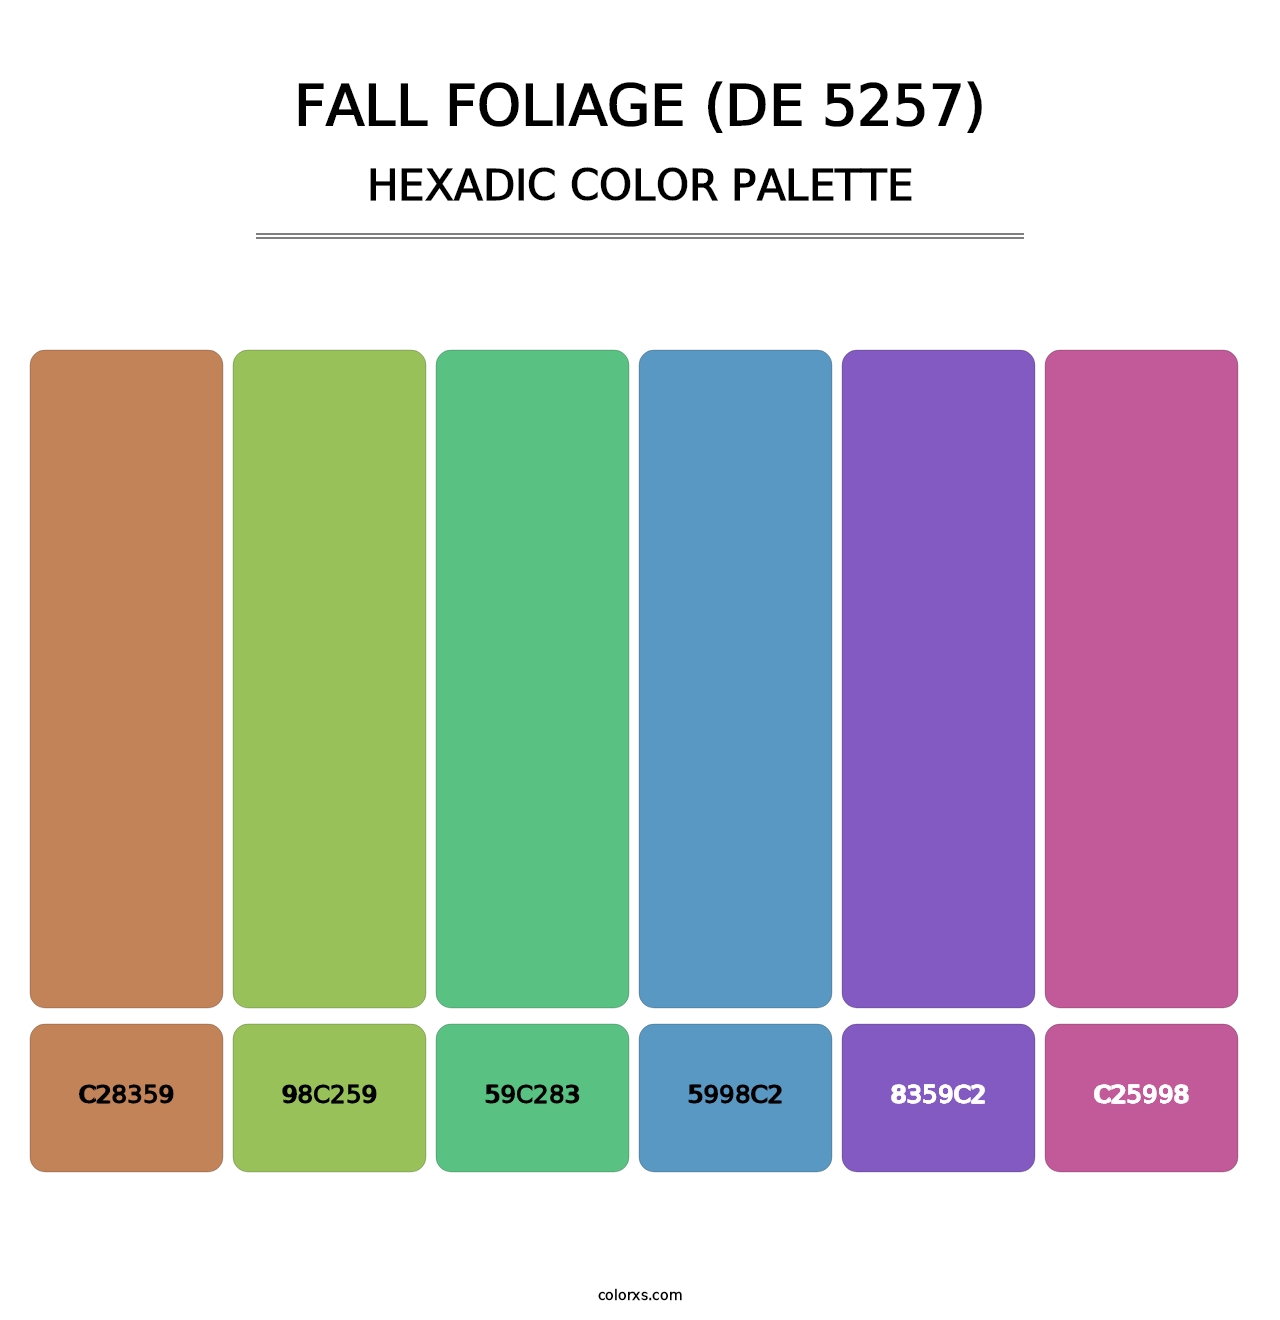 Fall Foliage (DE 5257) - Hexadic Color Palette